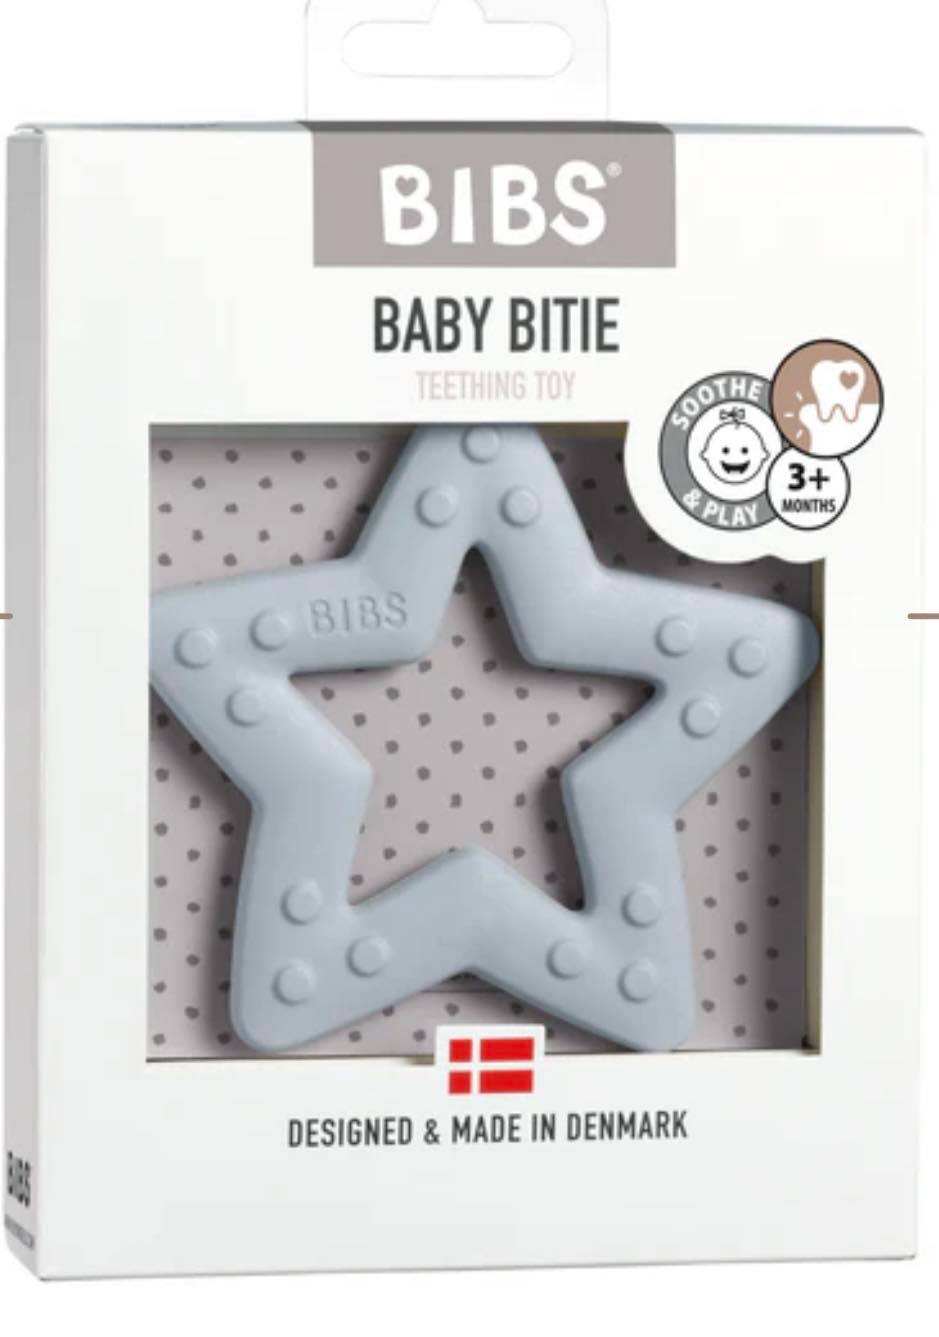 Baby Bitie teething toy 